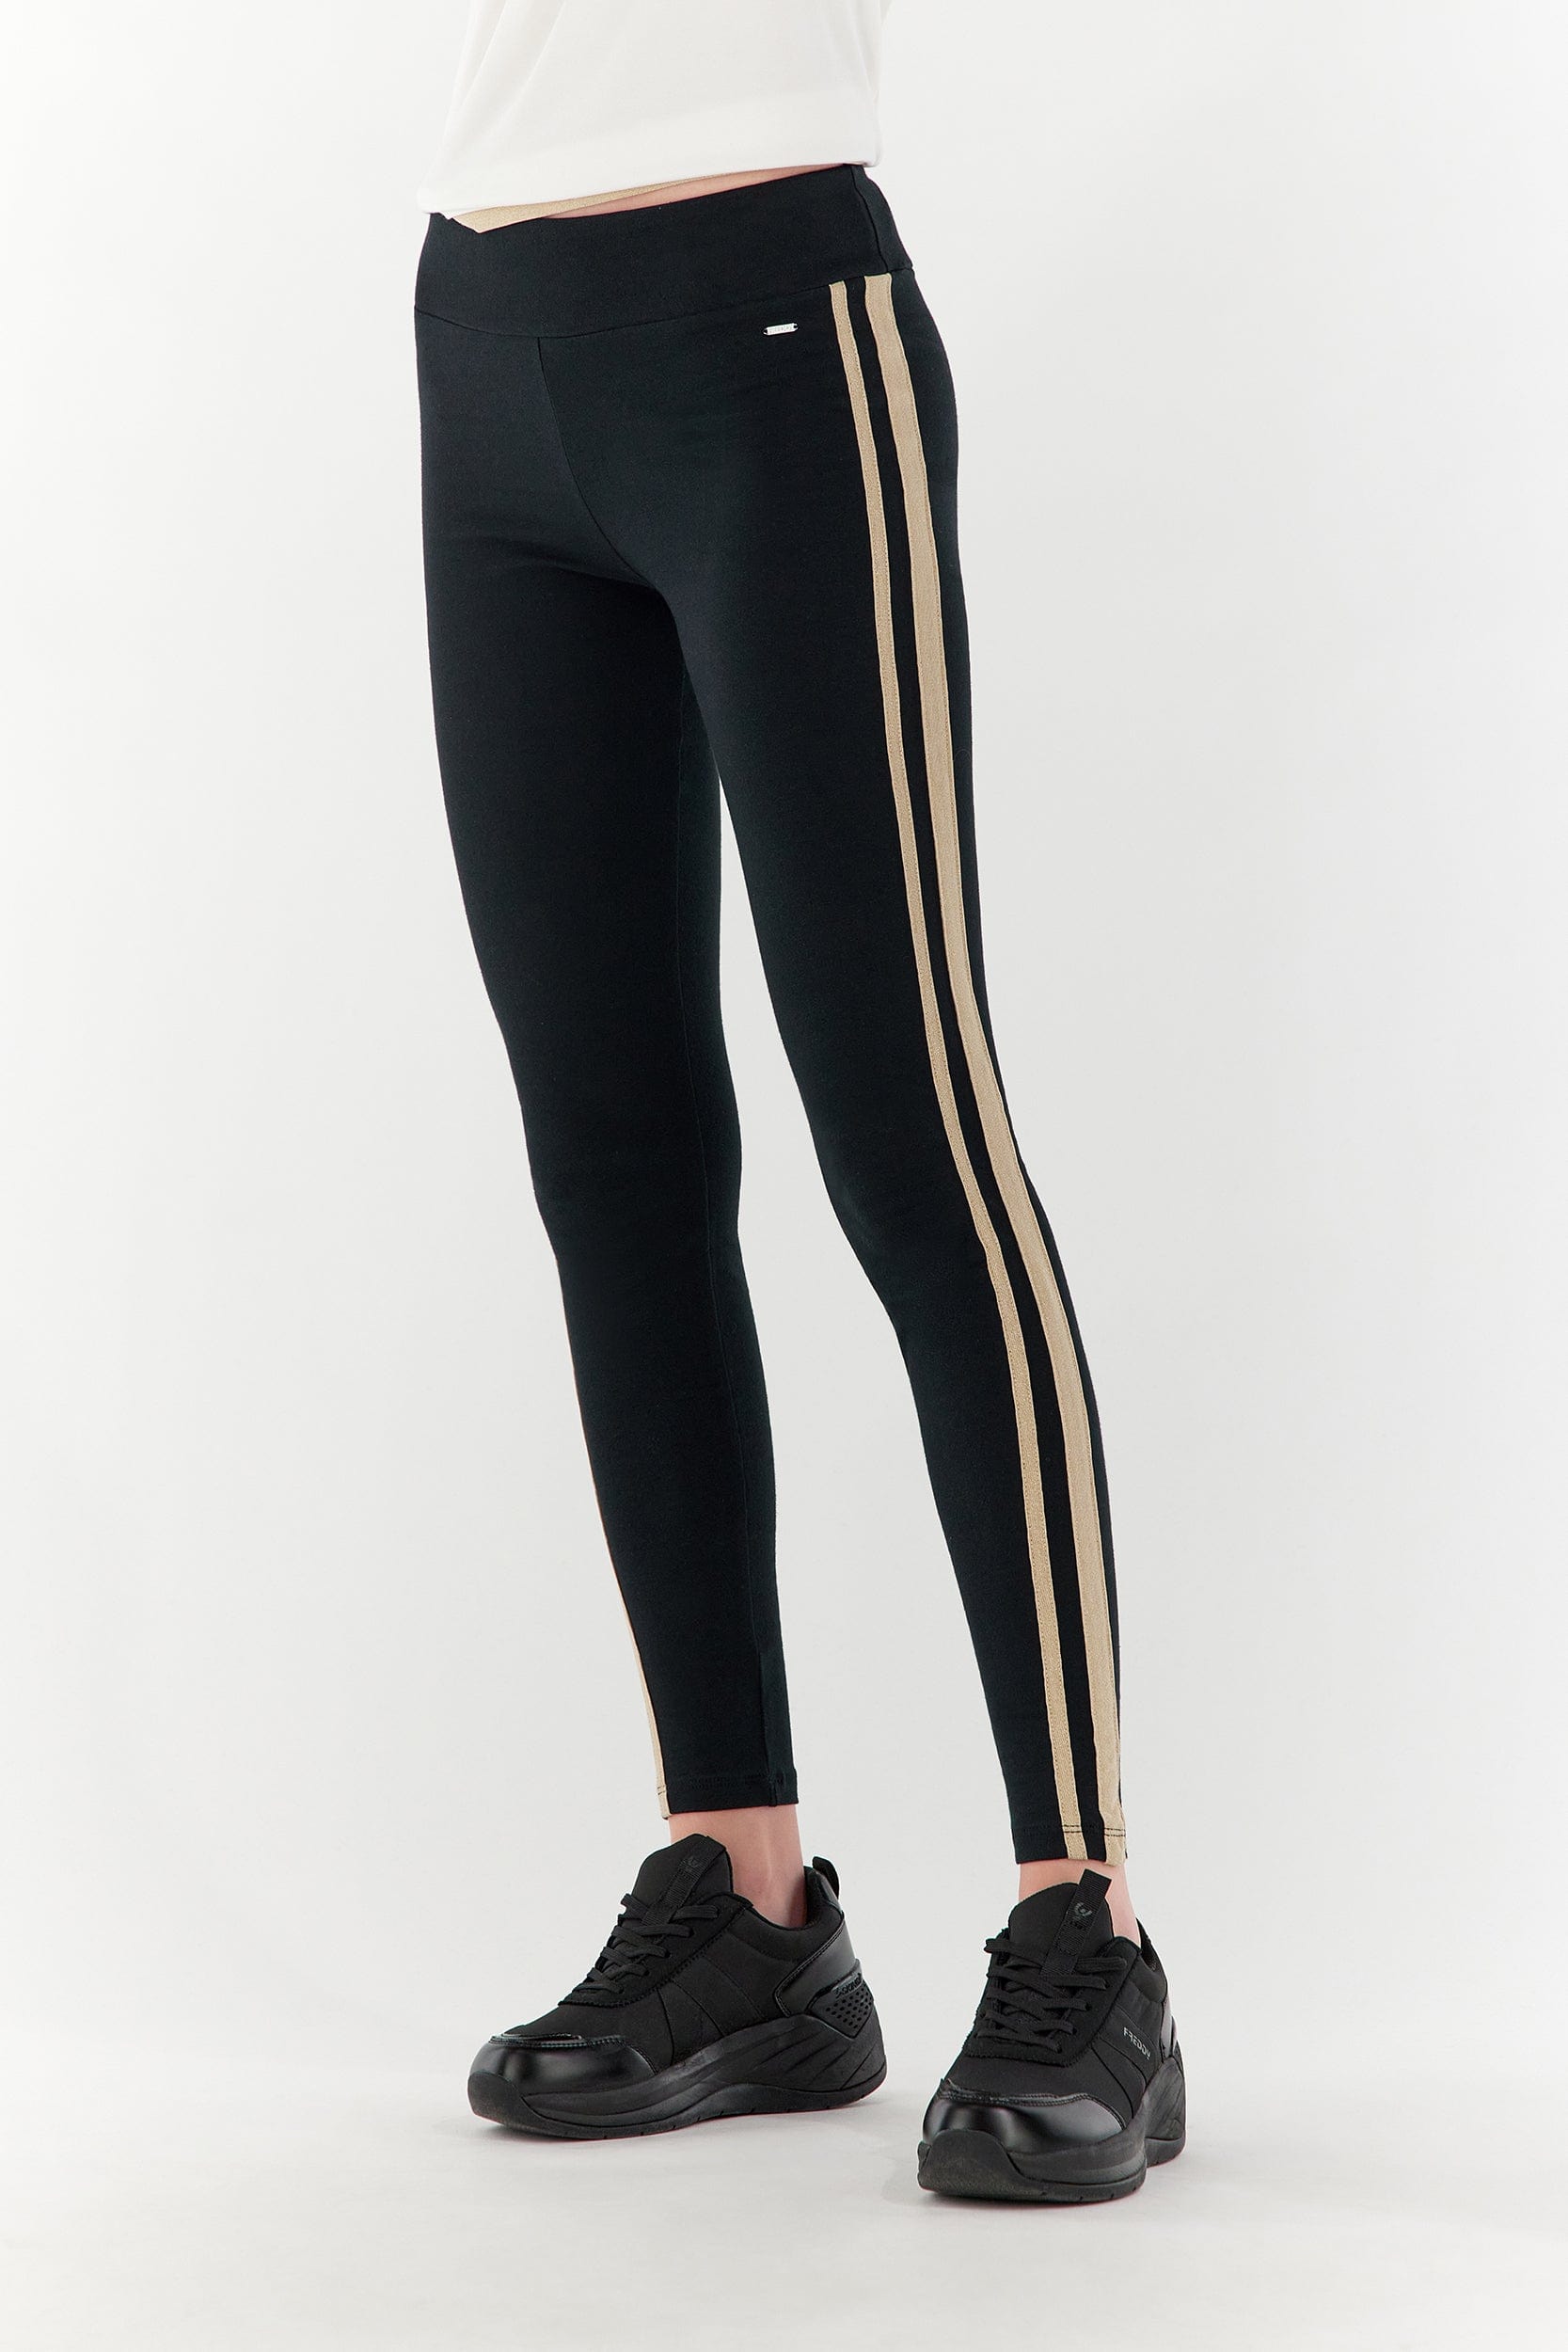 Lurex Activewear Leggings - Mid Rise - Full Length - Black + Gold Stripe 3